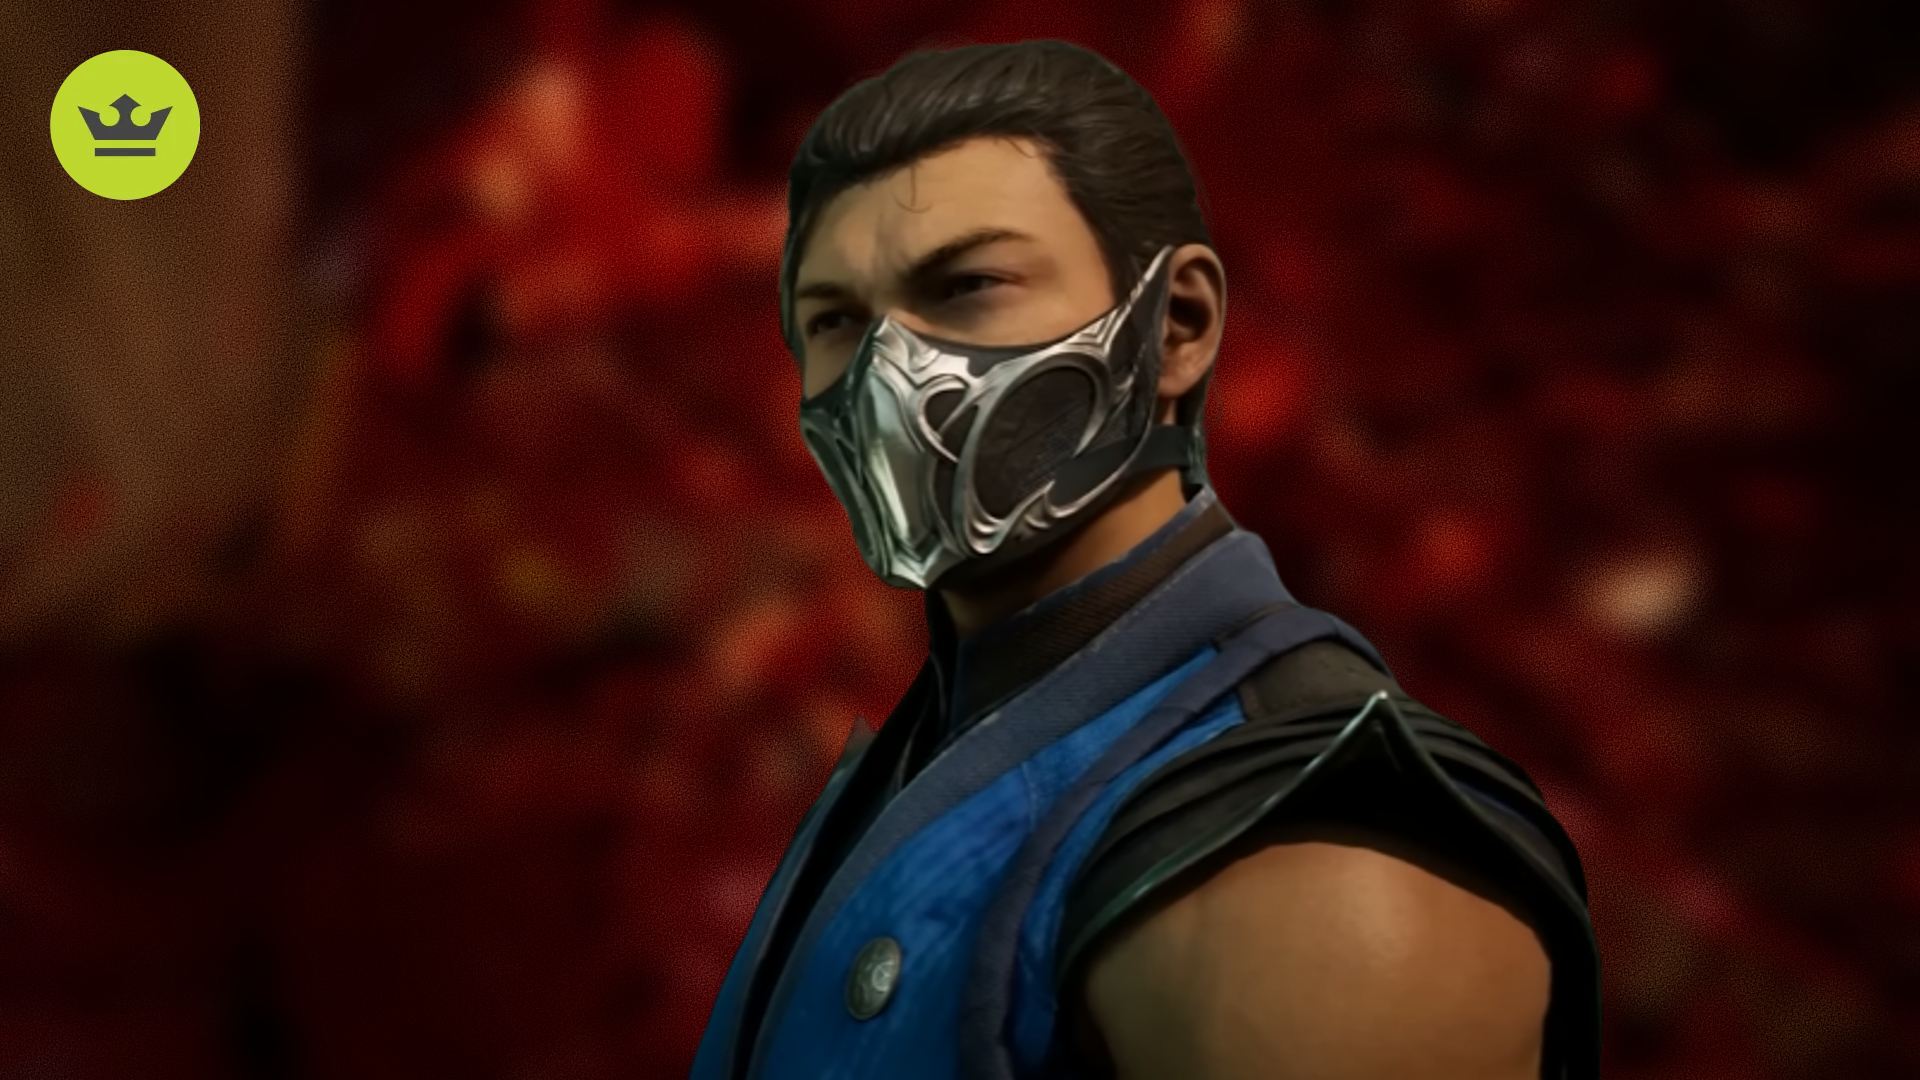 Mortal Kombat 1 Characters: Sub Zero can be seen